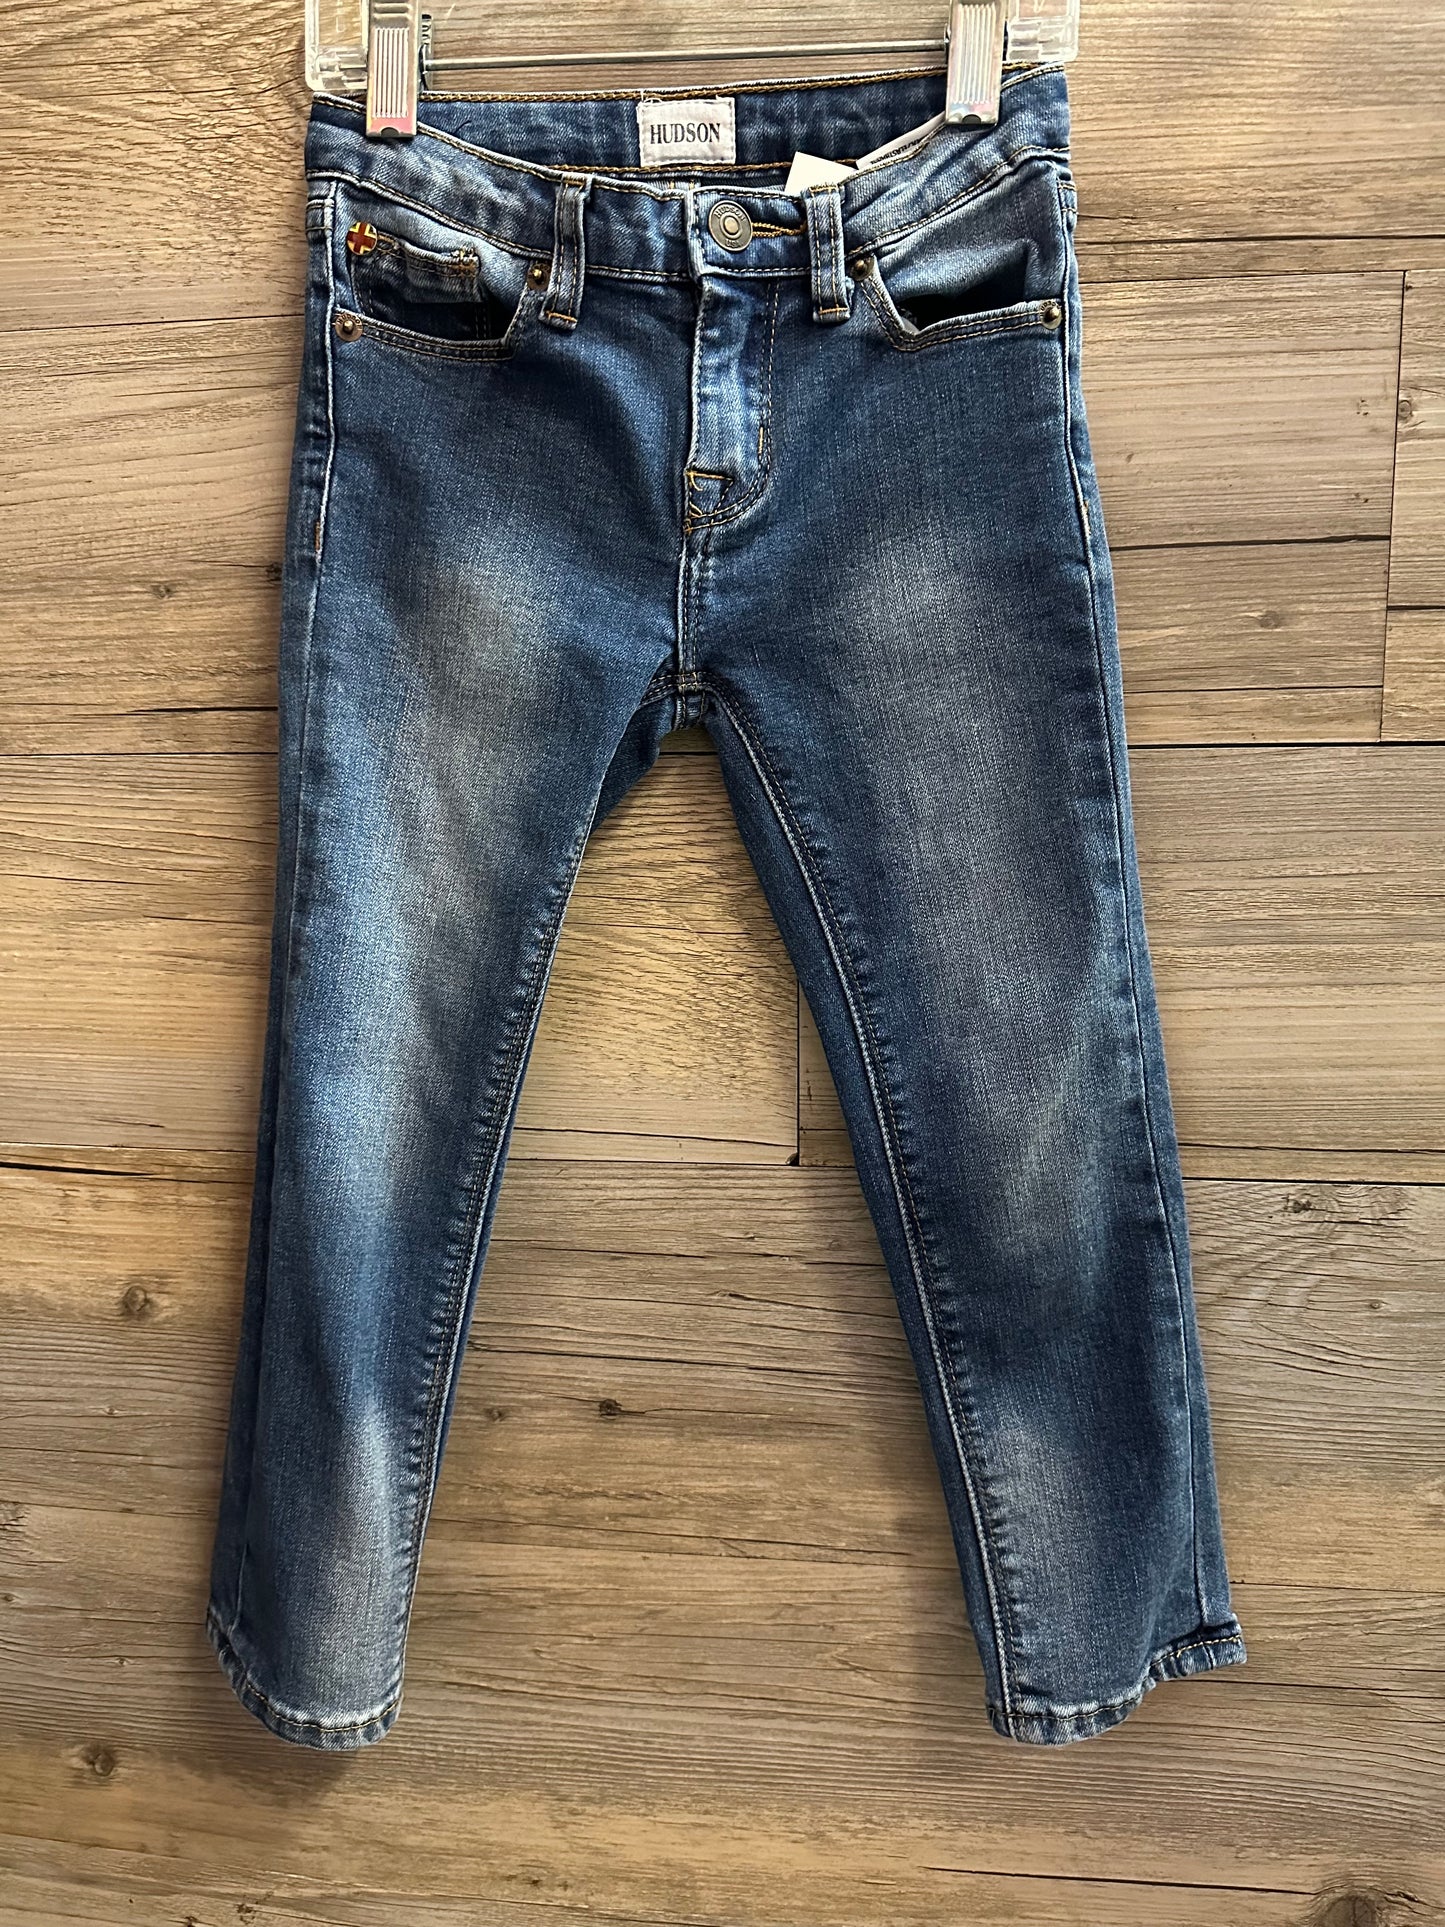 Hudson Denim Jeans, Size 5